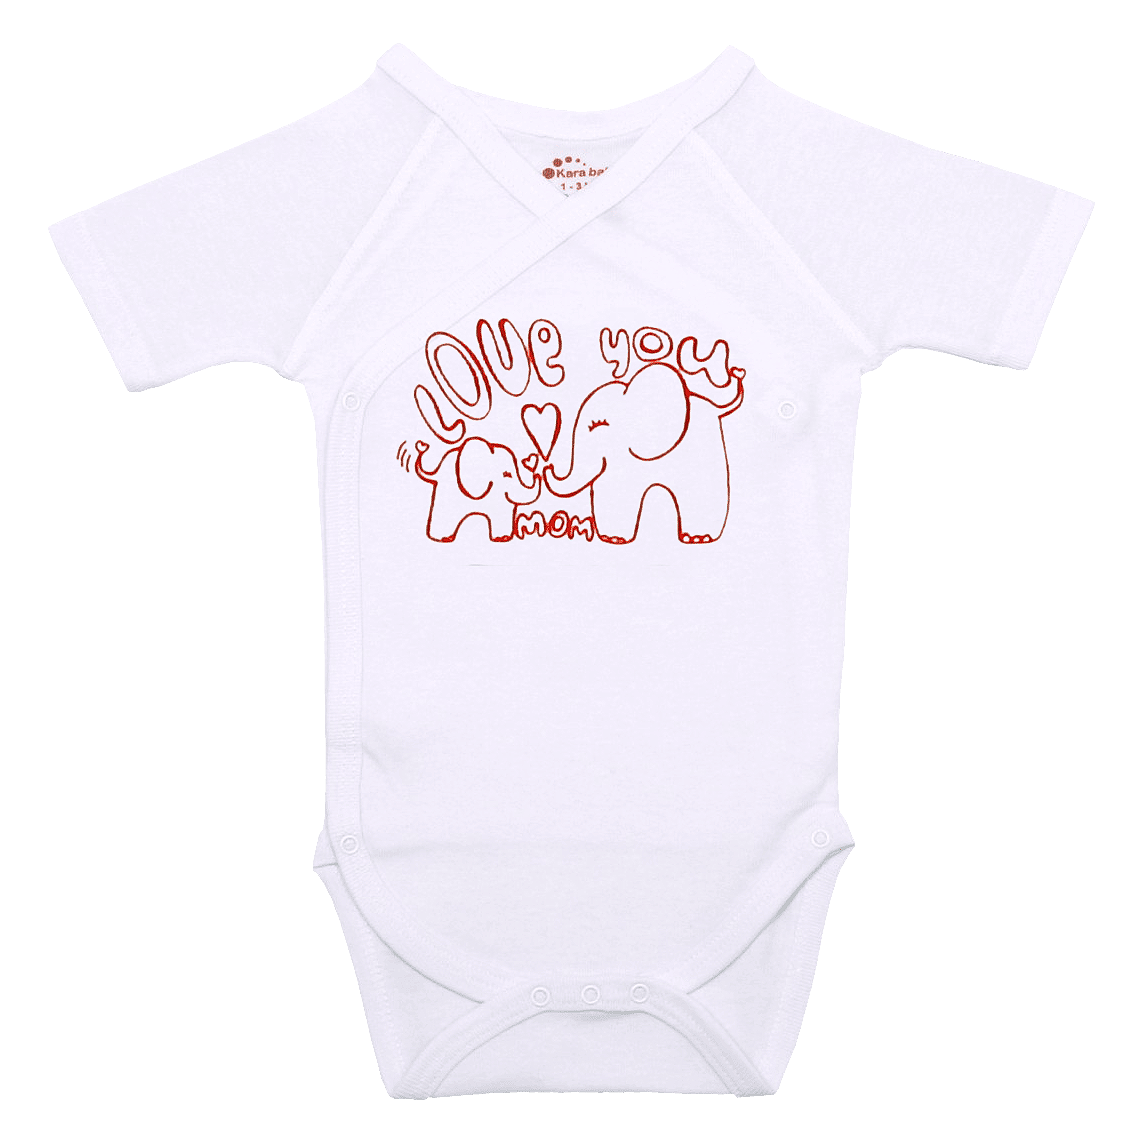 Body maneca scurta - Elefanti - Kara Baby  1-3 luni (56-62cm)